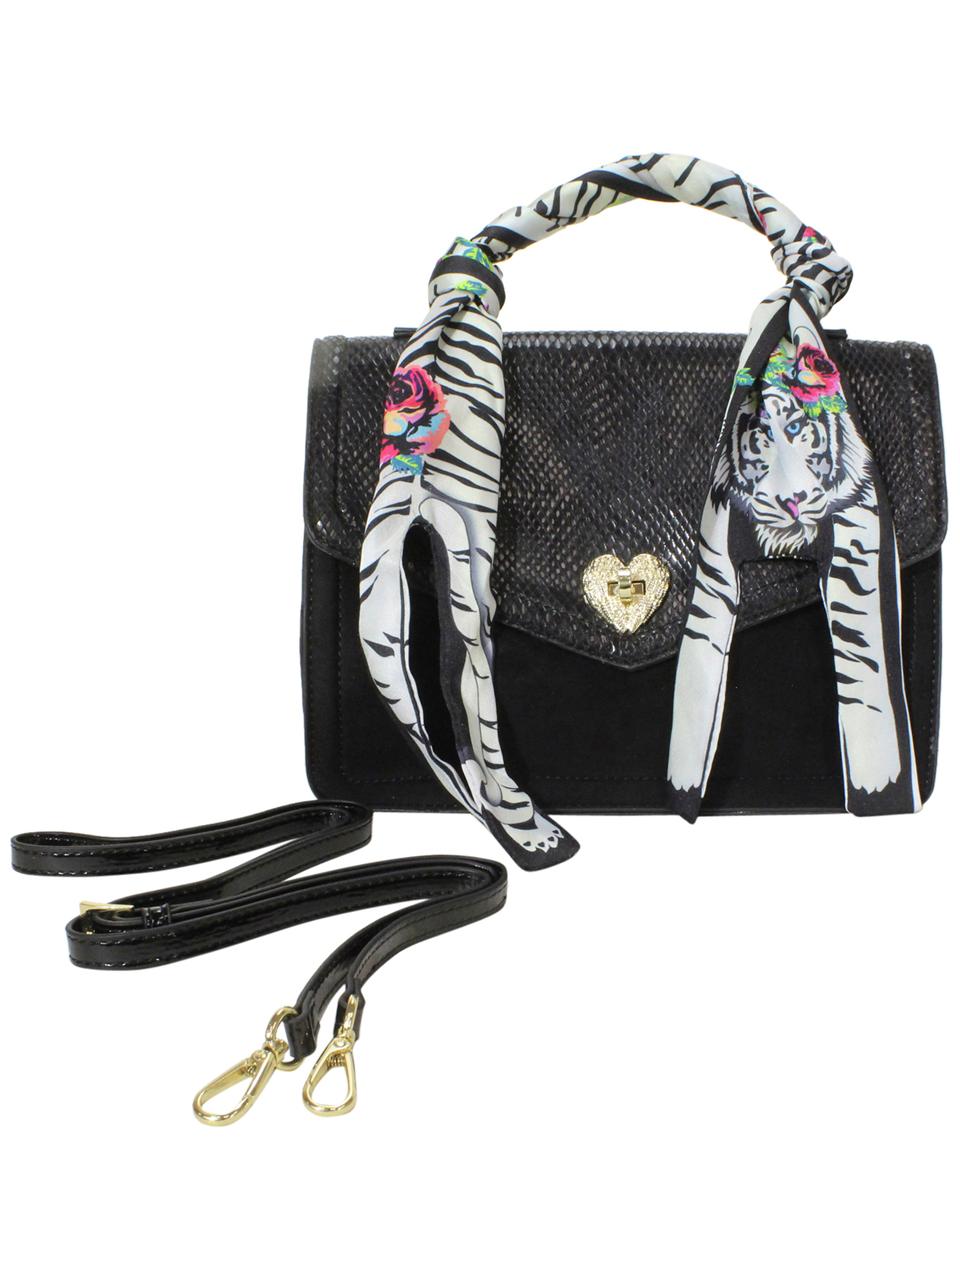 BETSEY JOHNSON BLACK SATCHEL Handbag SKULL FLORAL Pink Scarf Purse  Crossbody NWT $64.98 - PicClick